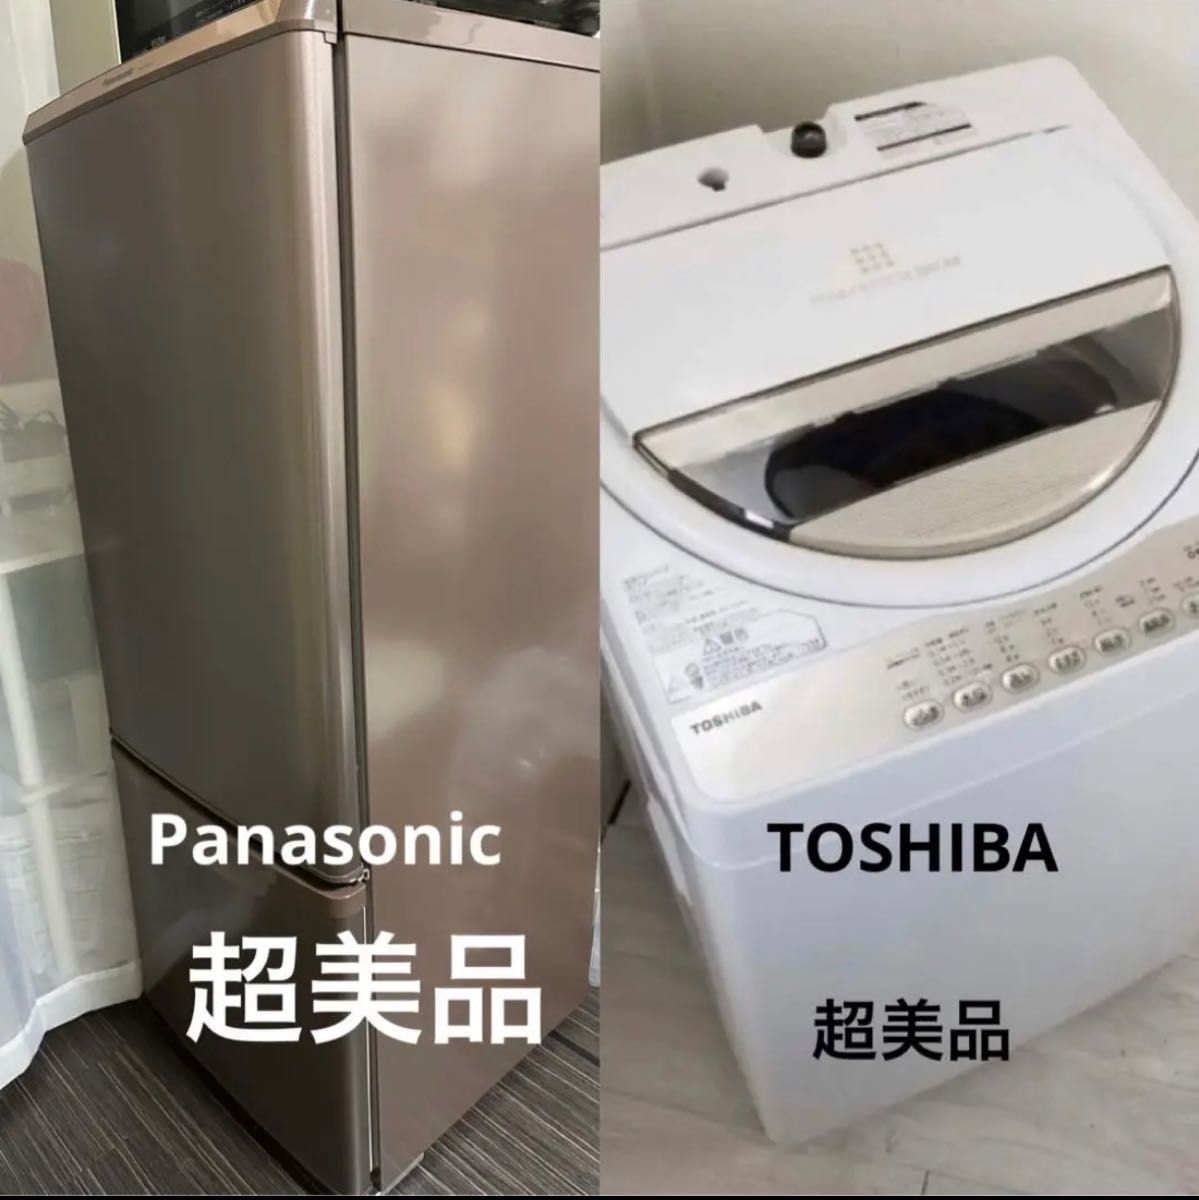 Panasonic ブラウン冷蔵庫 NR-B178W 東芝 全自動洗濯機 一人暮らし 家電セット②